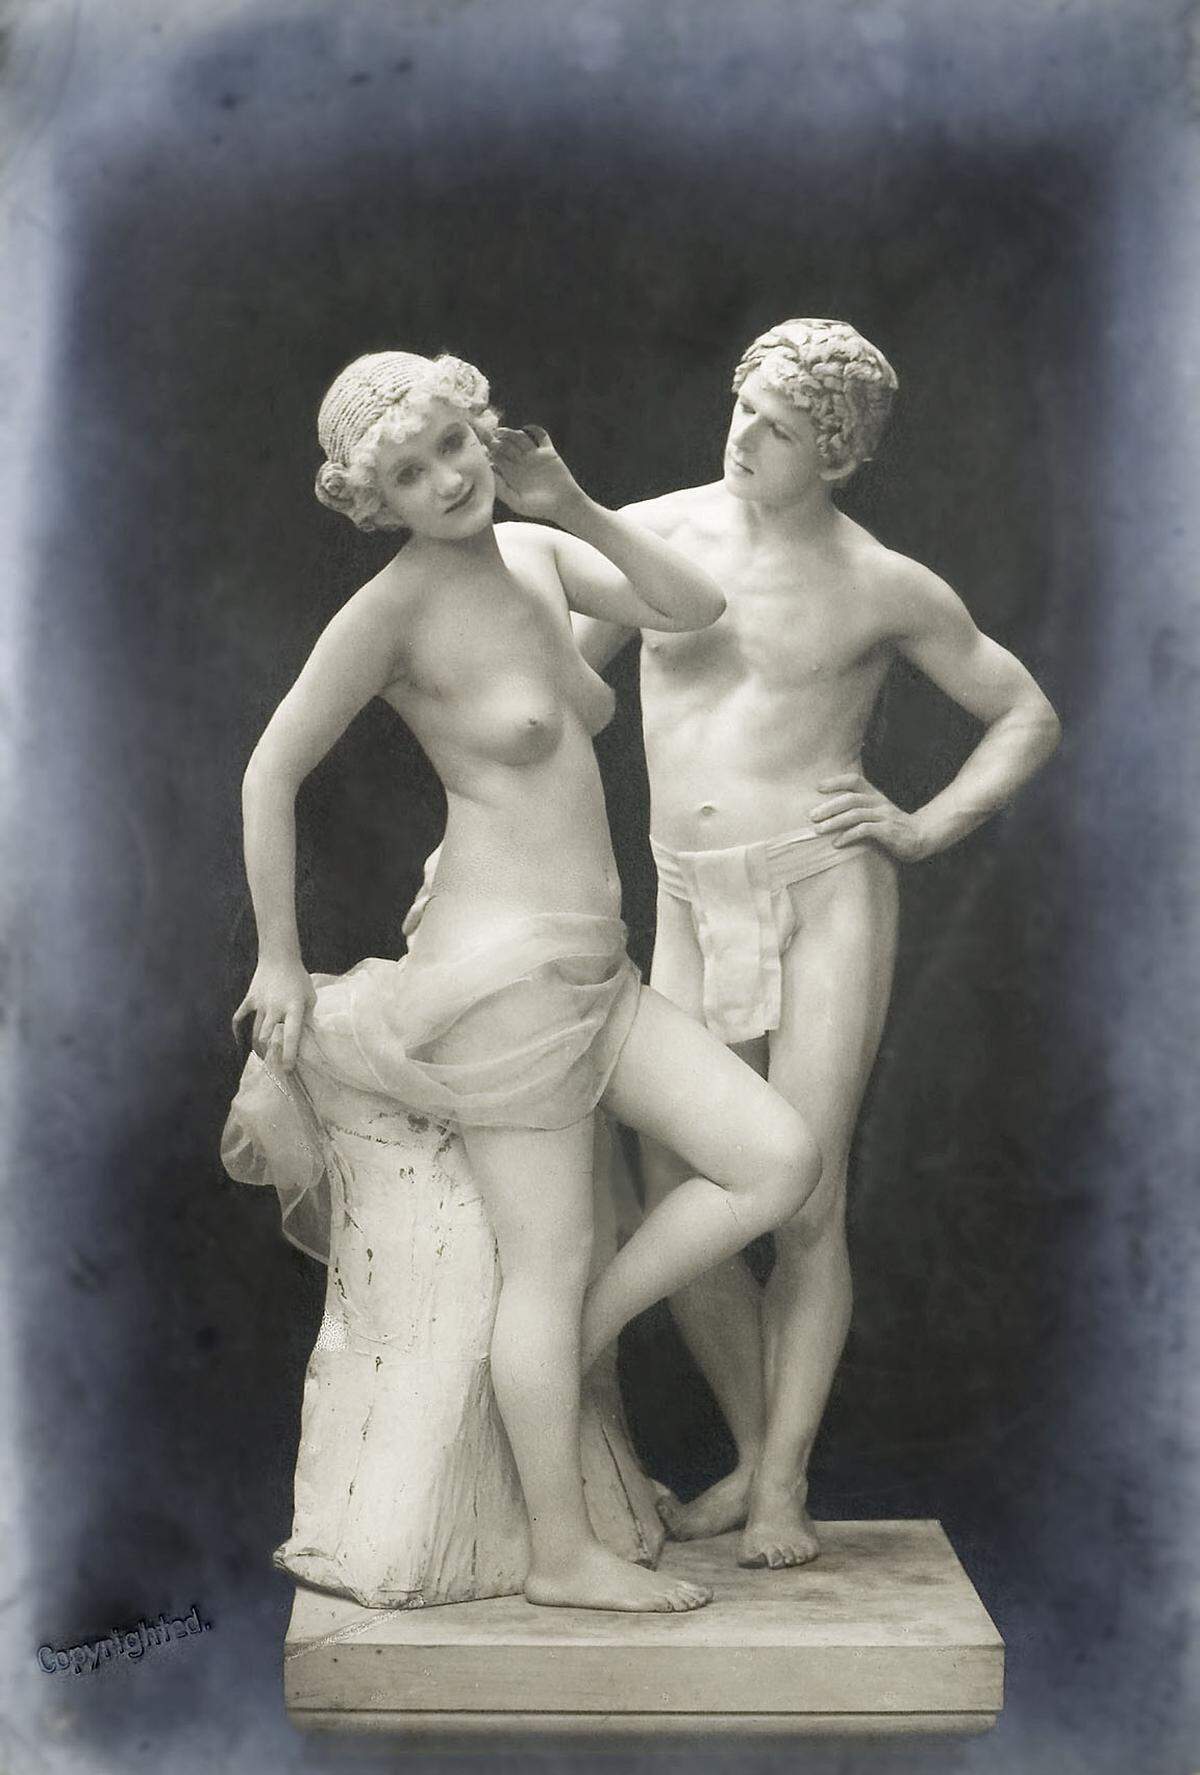 OTTO SKOWRANECK Lebende Marmorbildwerke: Olga Desmond und Adolf Salge, 1908 Gelatin silver print 21,8 x 14,7 cm © Otto Skowraneck